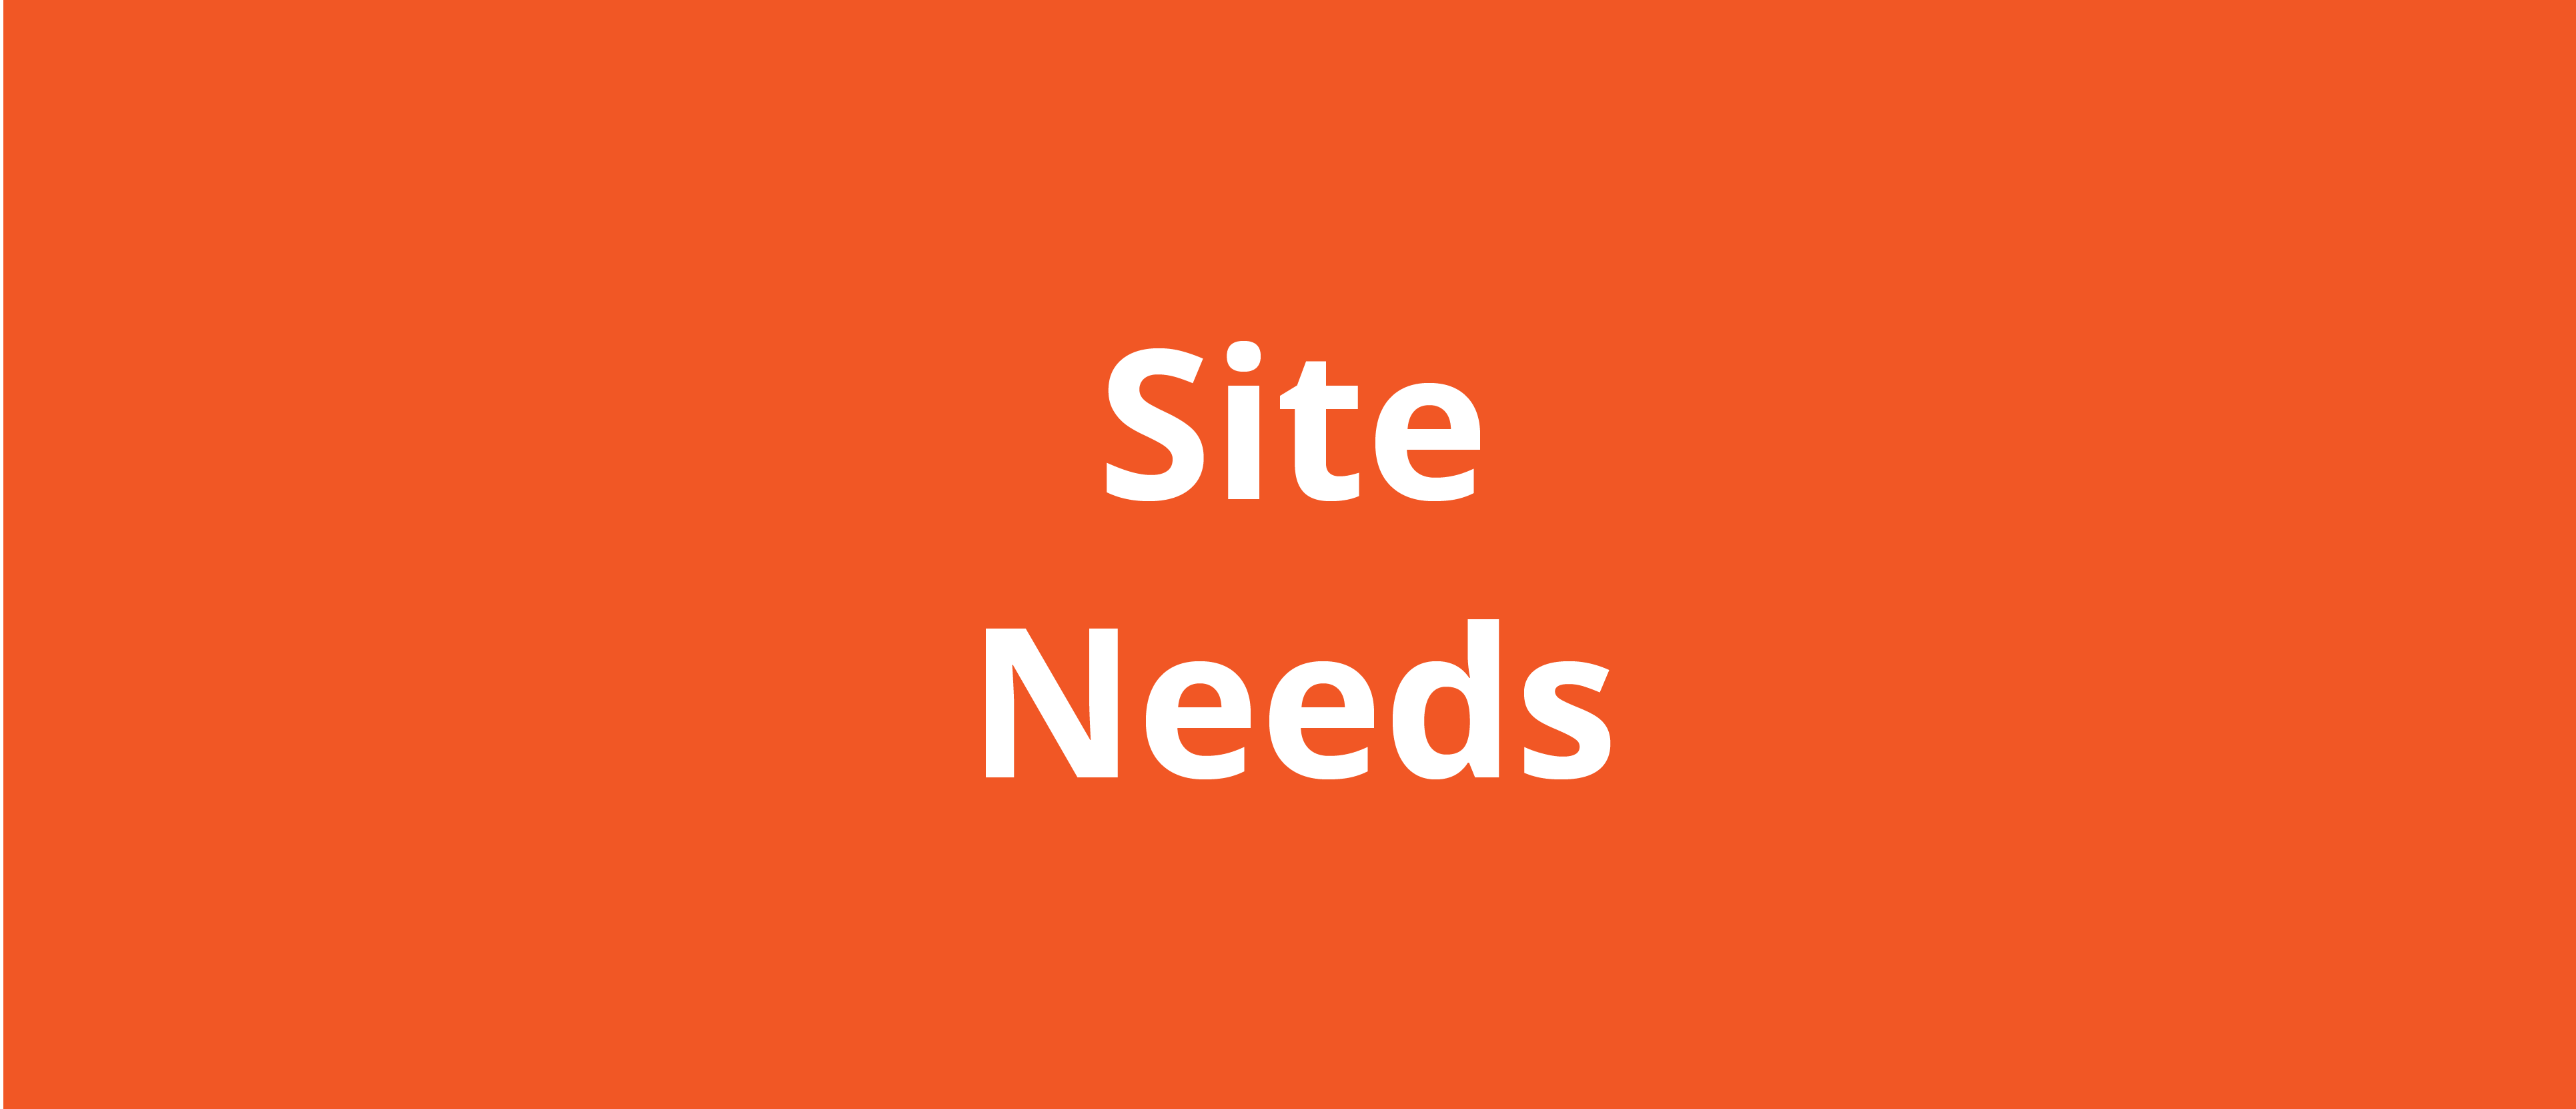 Site Needs